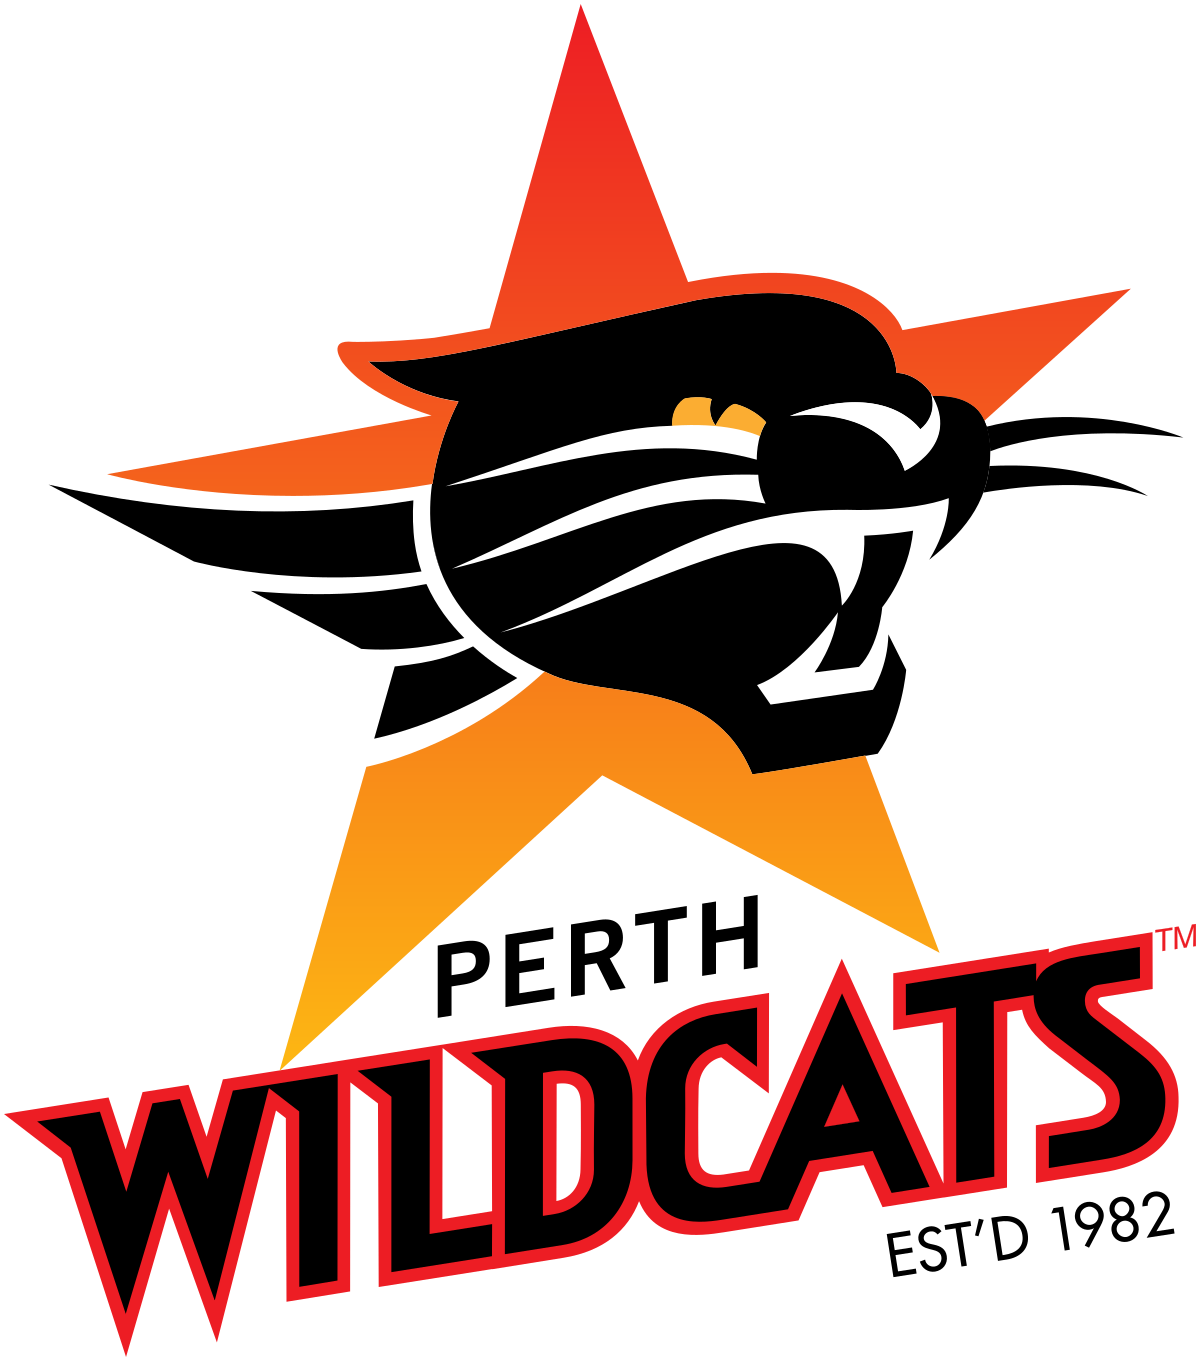 Perth Wildcats - Wikipedia